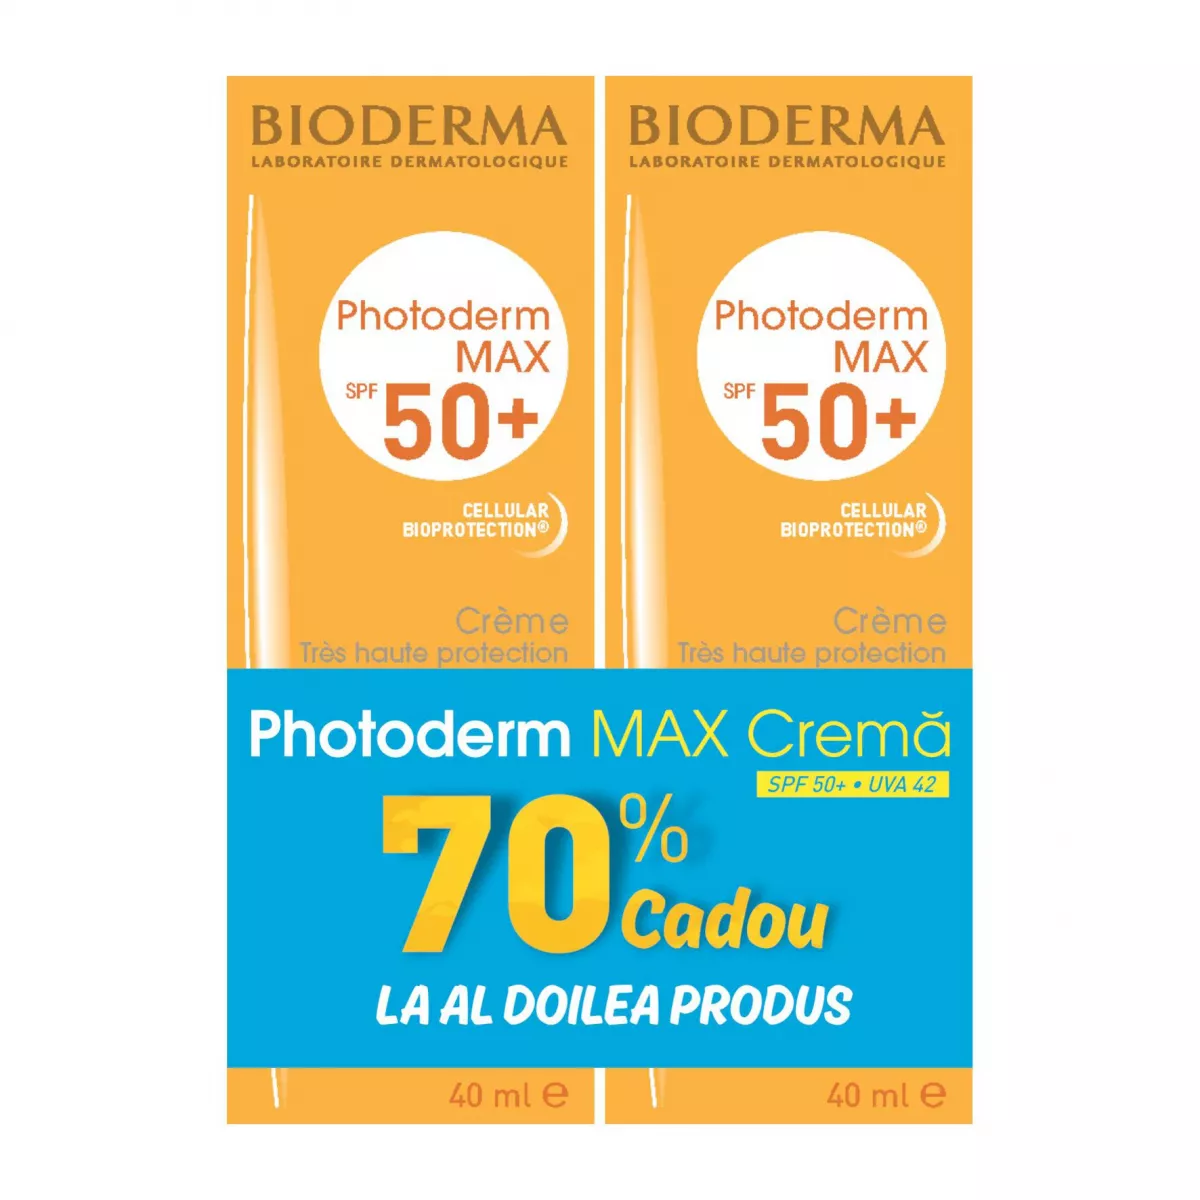 BIODERMA Photoderm Max SFP50+ crema 40ml 1+70%, [],remediumfarm.ro